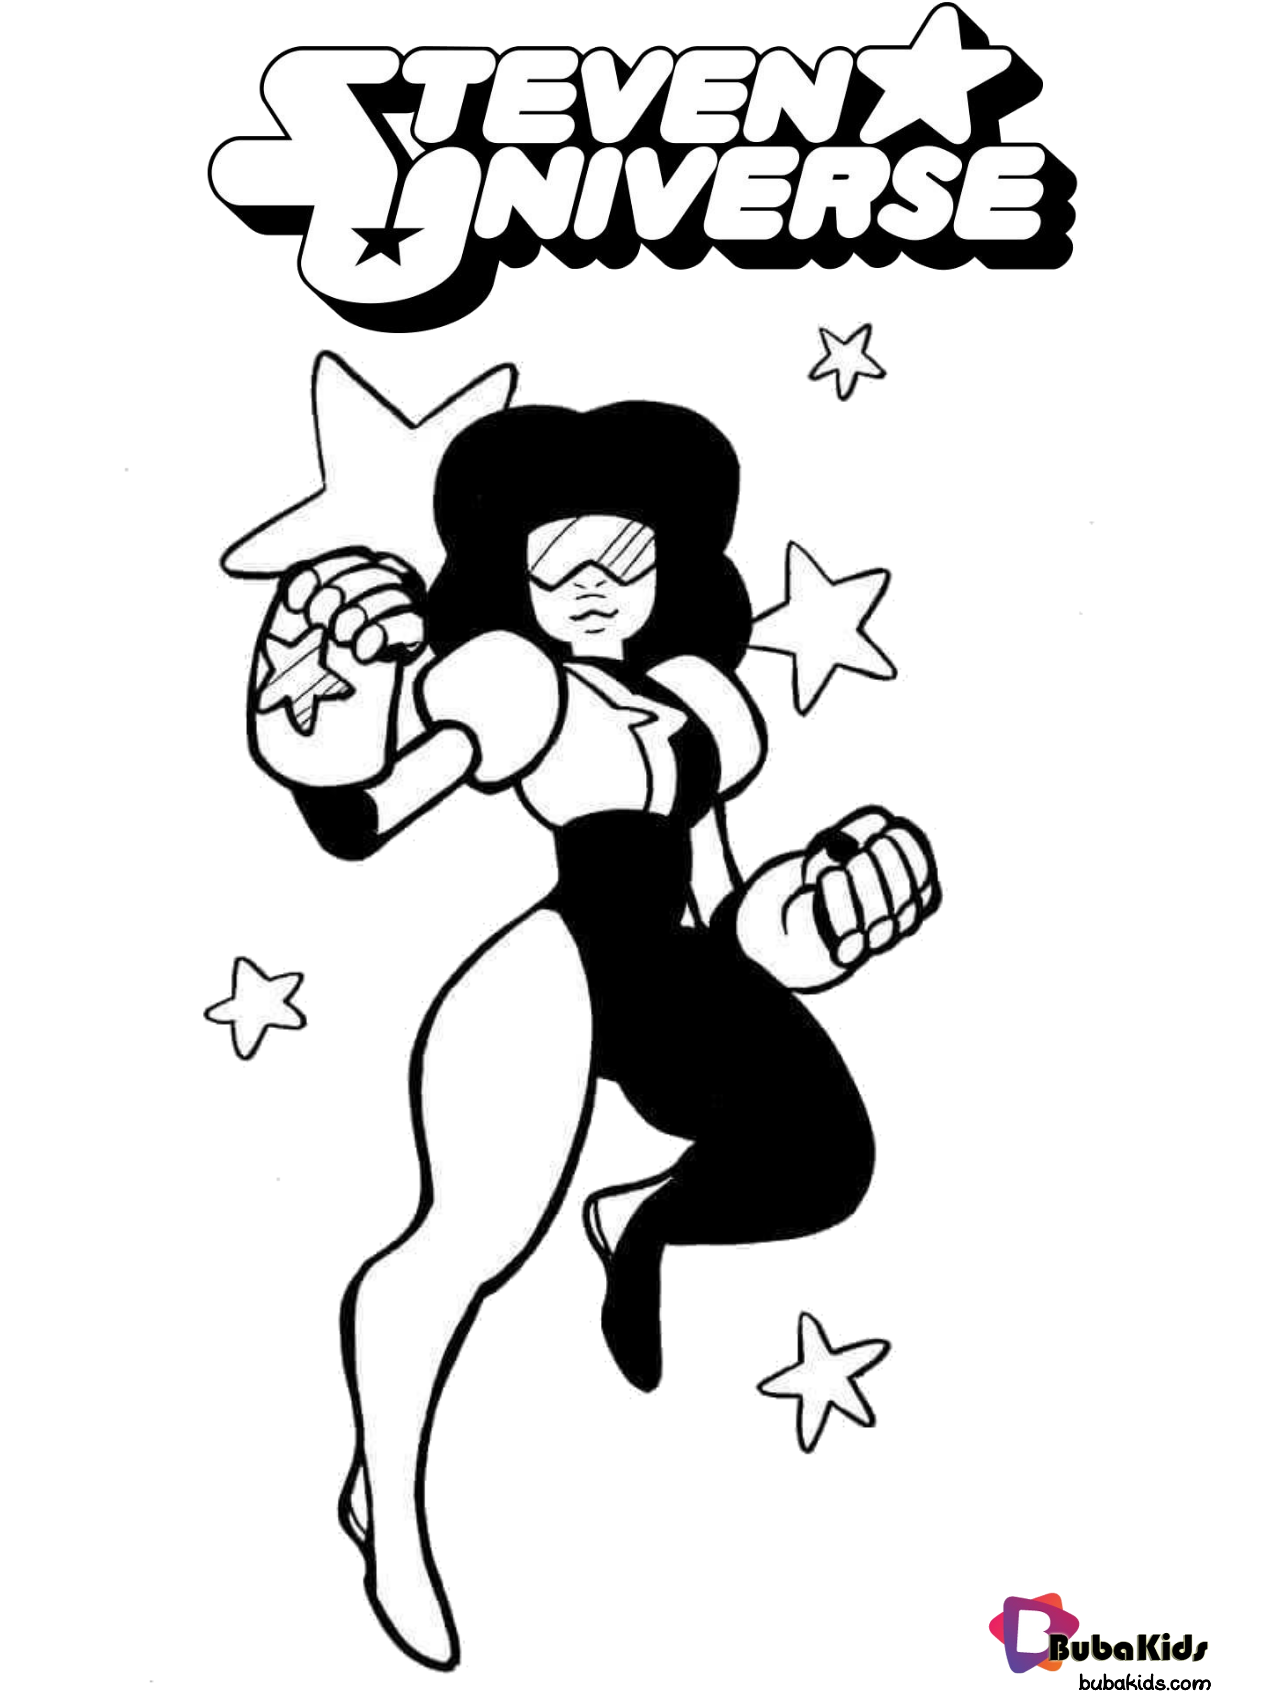 Garnet Steven Universe coloring page Wallpaper